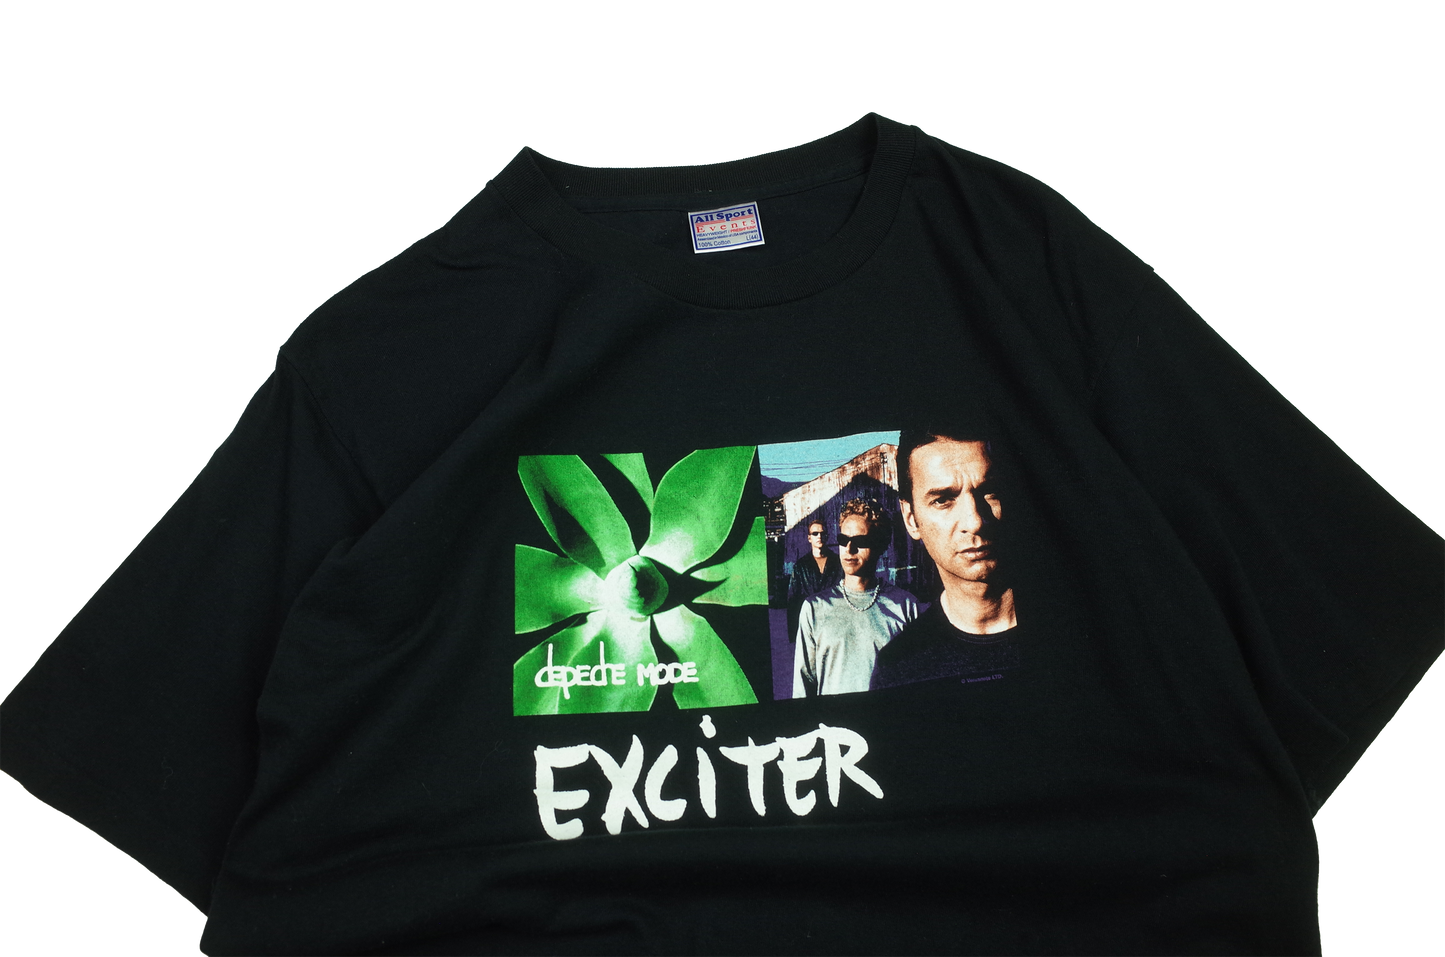 2001 Depeche Mode Exciter Tour // L